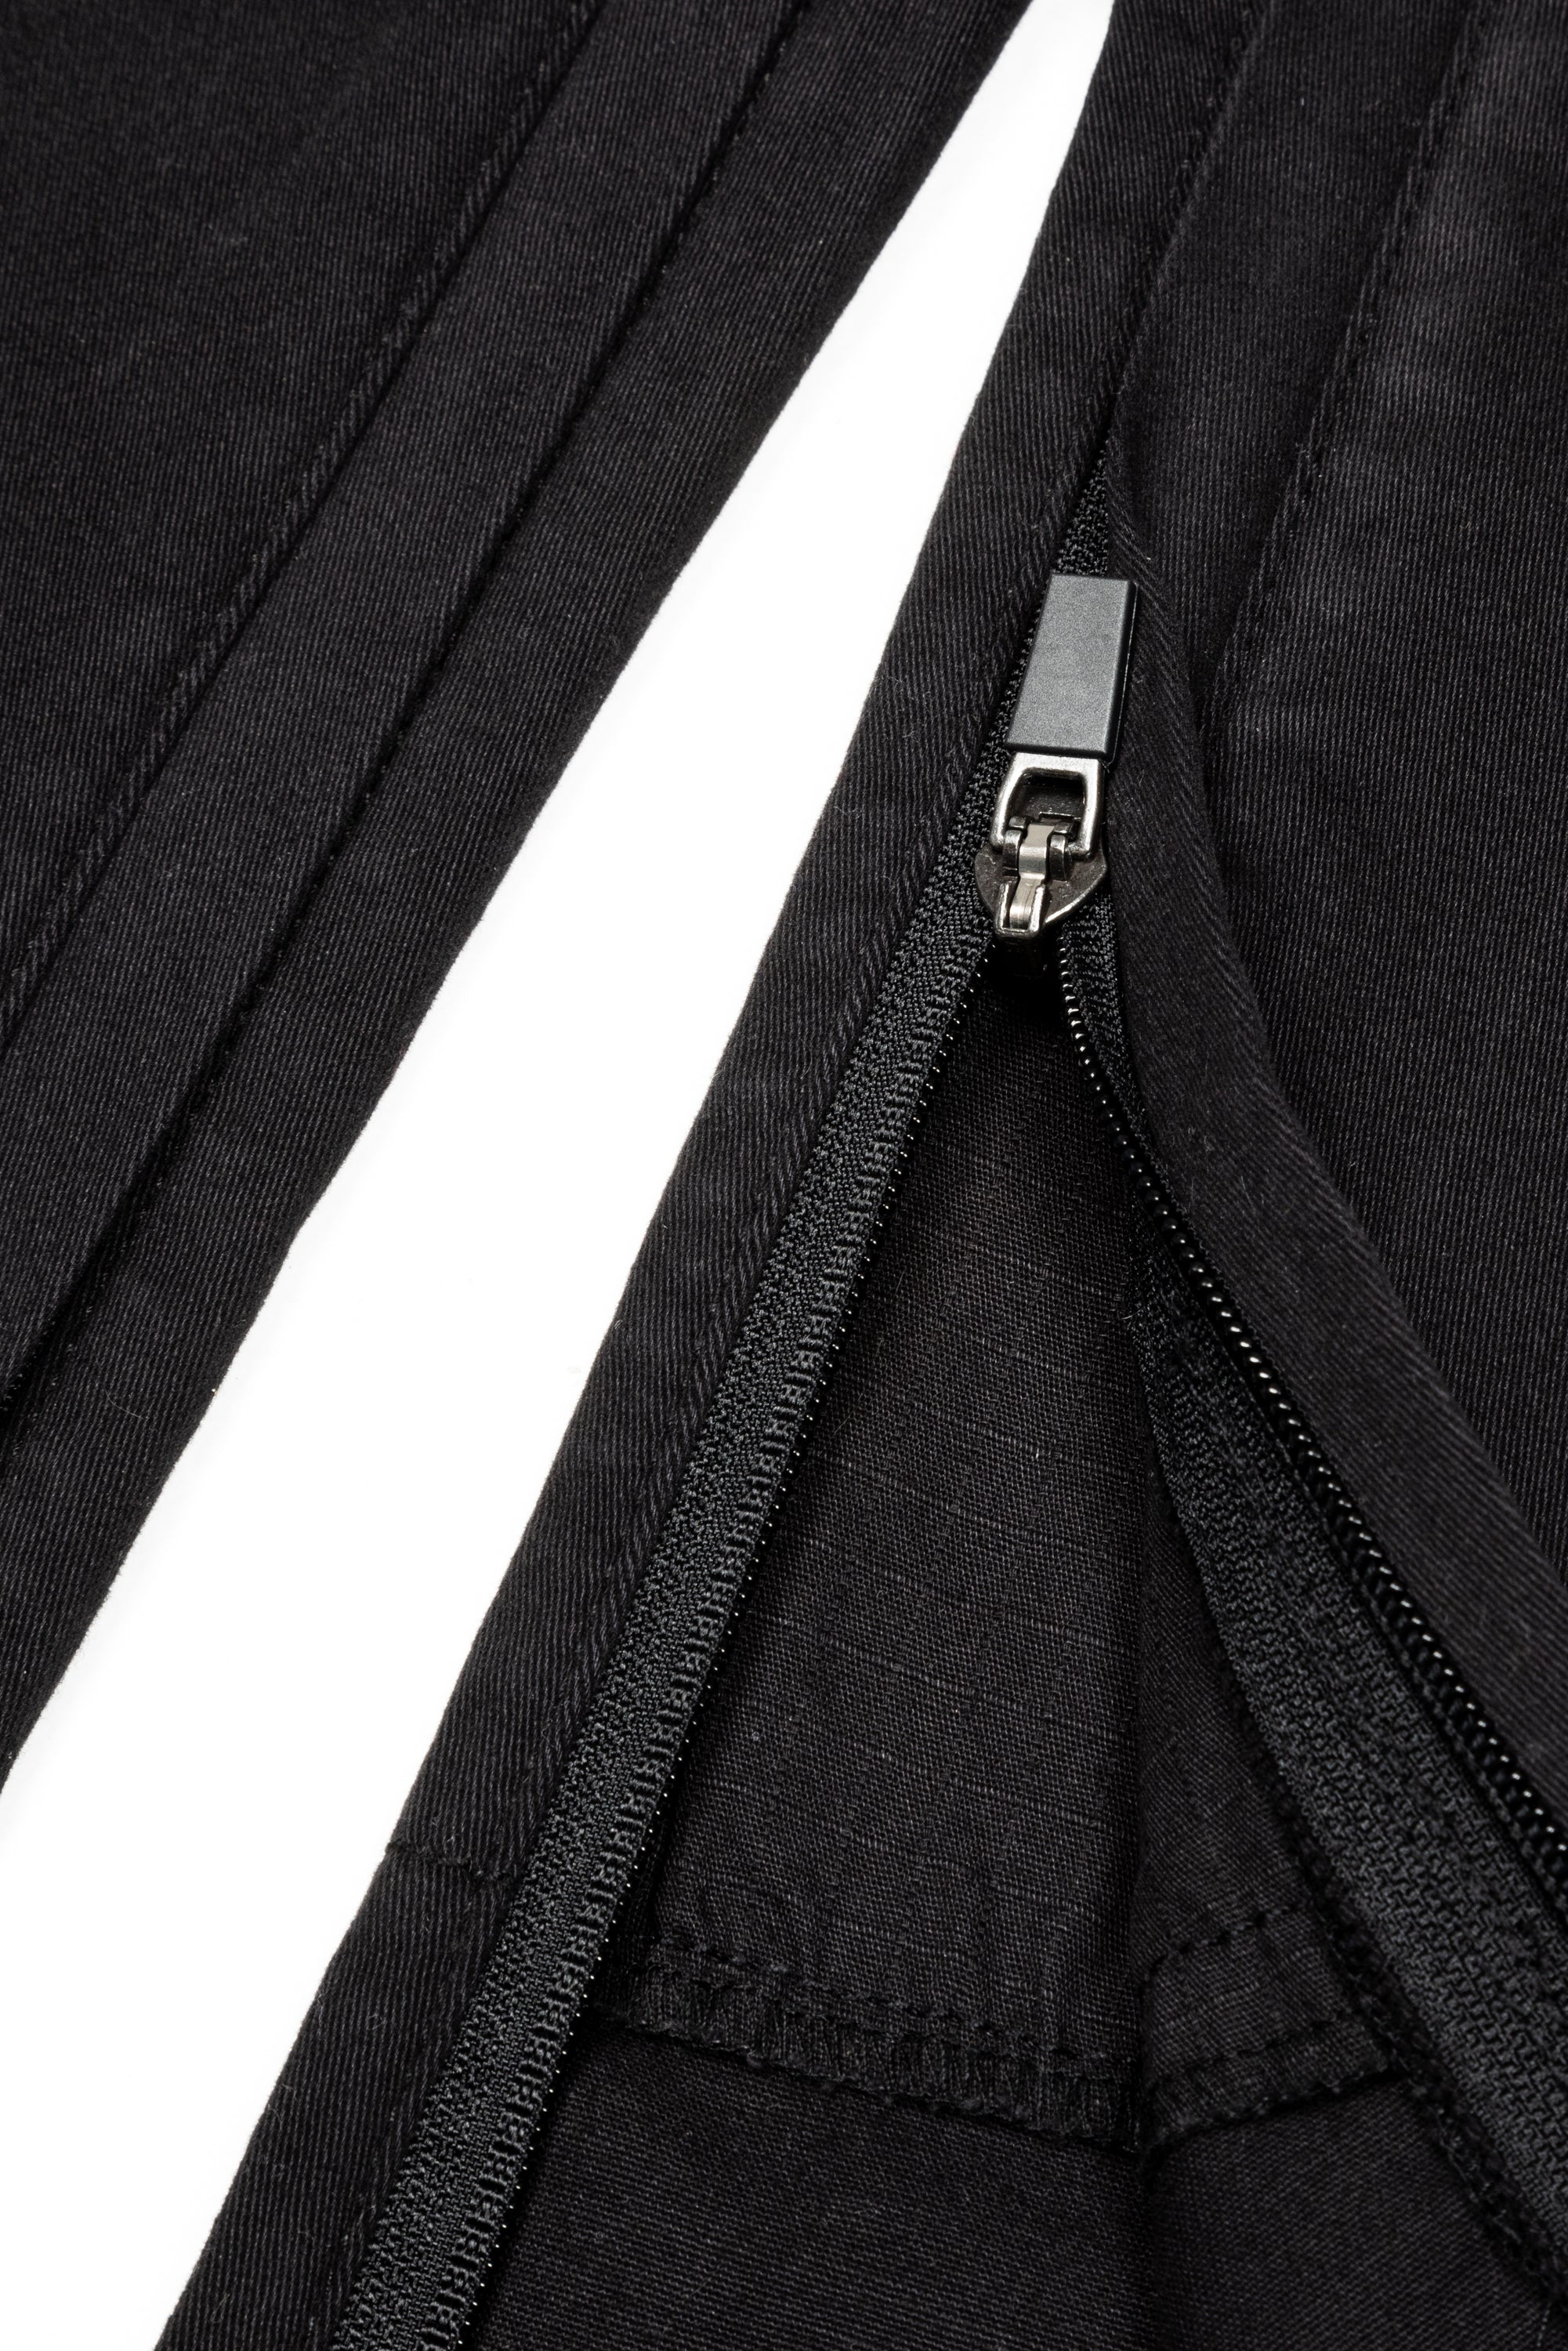 A close-up of the zipper.